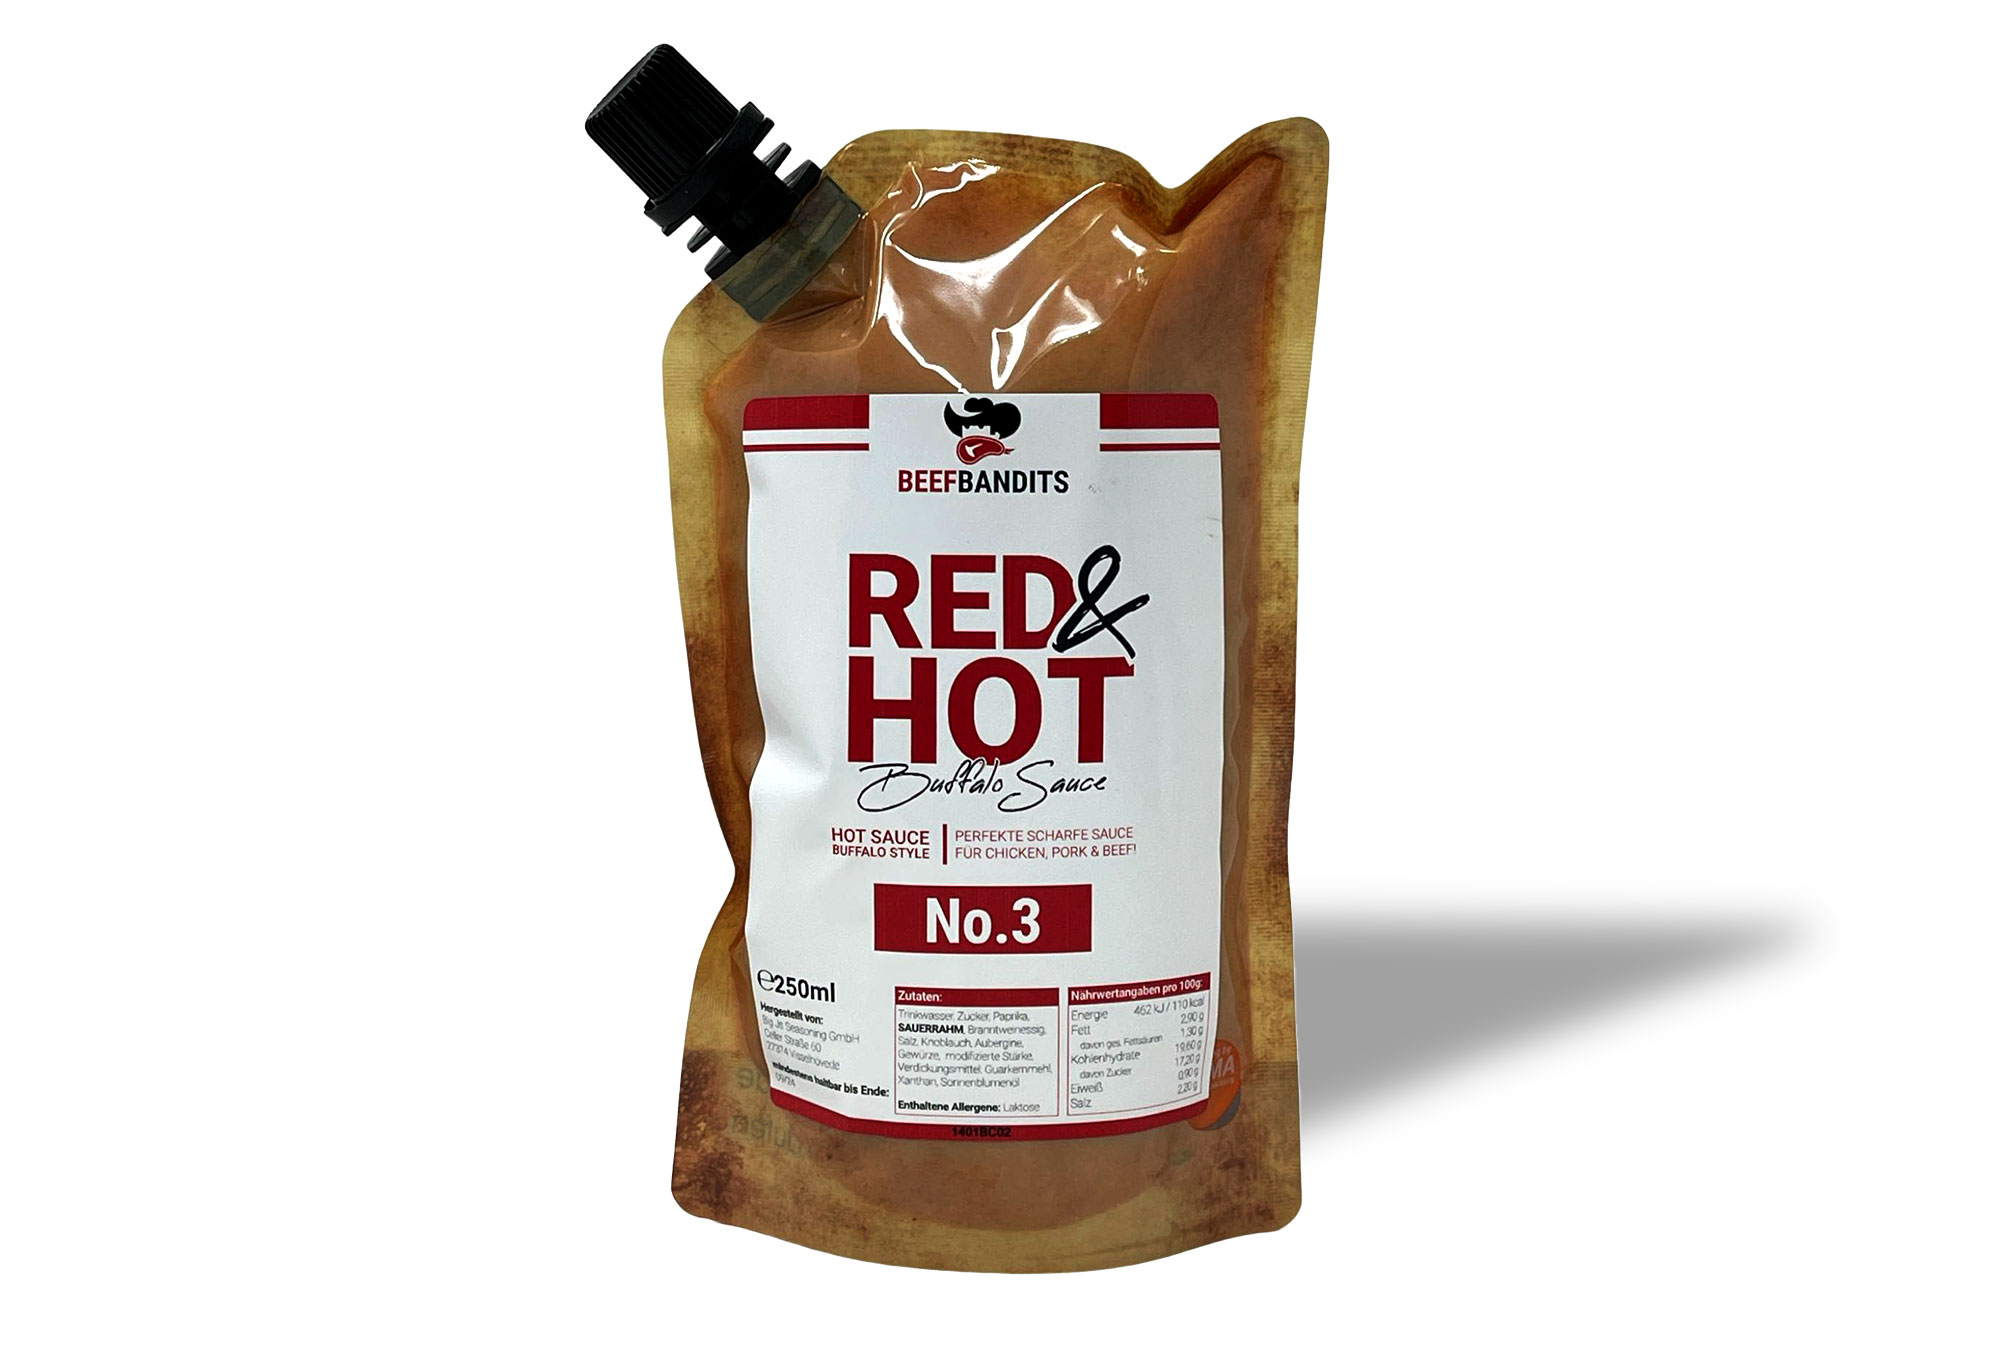 RED + HOT Buffalo Sauce | perfekte scharfe Soße für Chicken, Pork & Co | 250ml